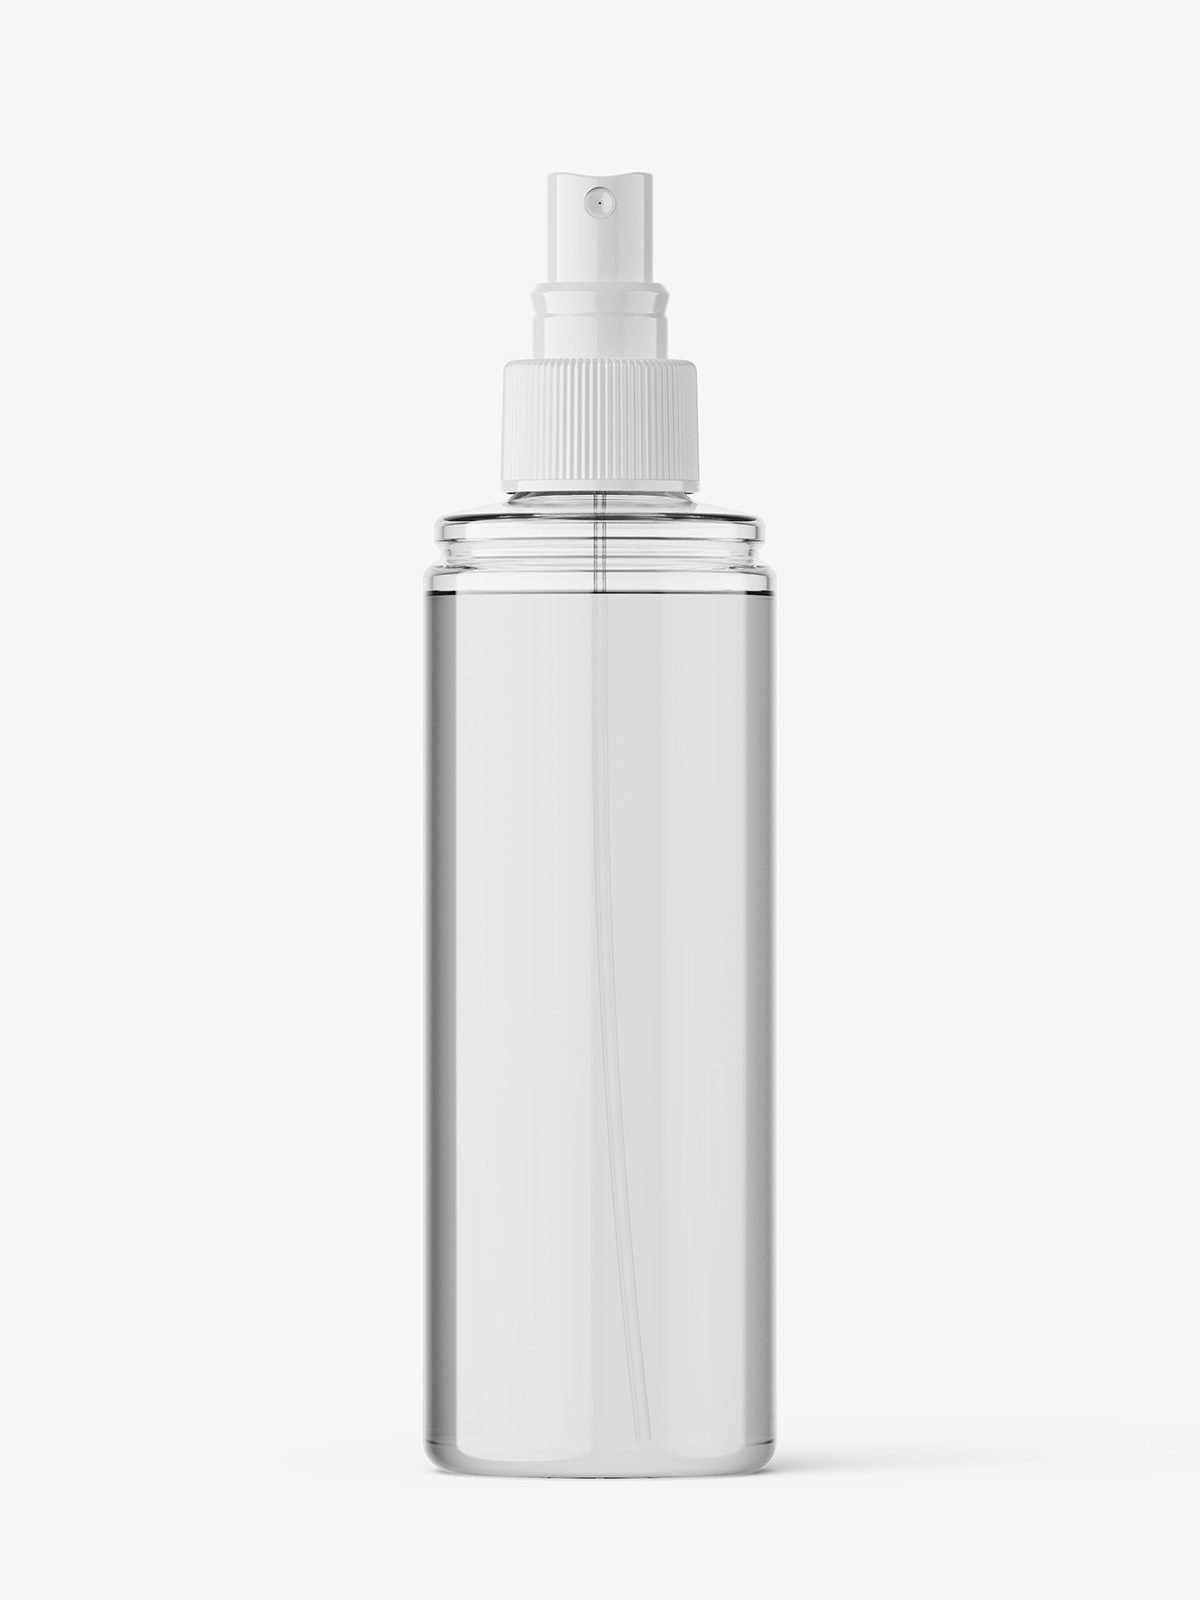 Download Transparent Bottle With Spray Cap Mockup Smarty Mockups